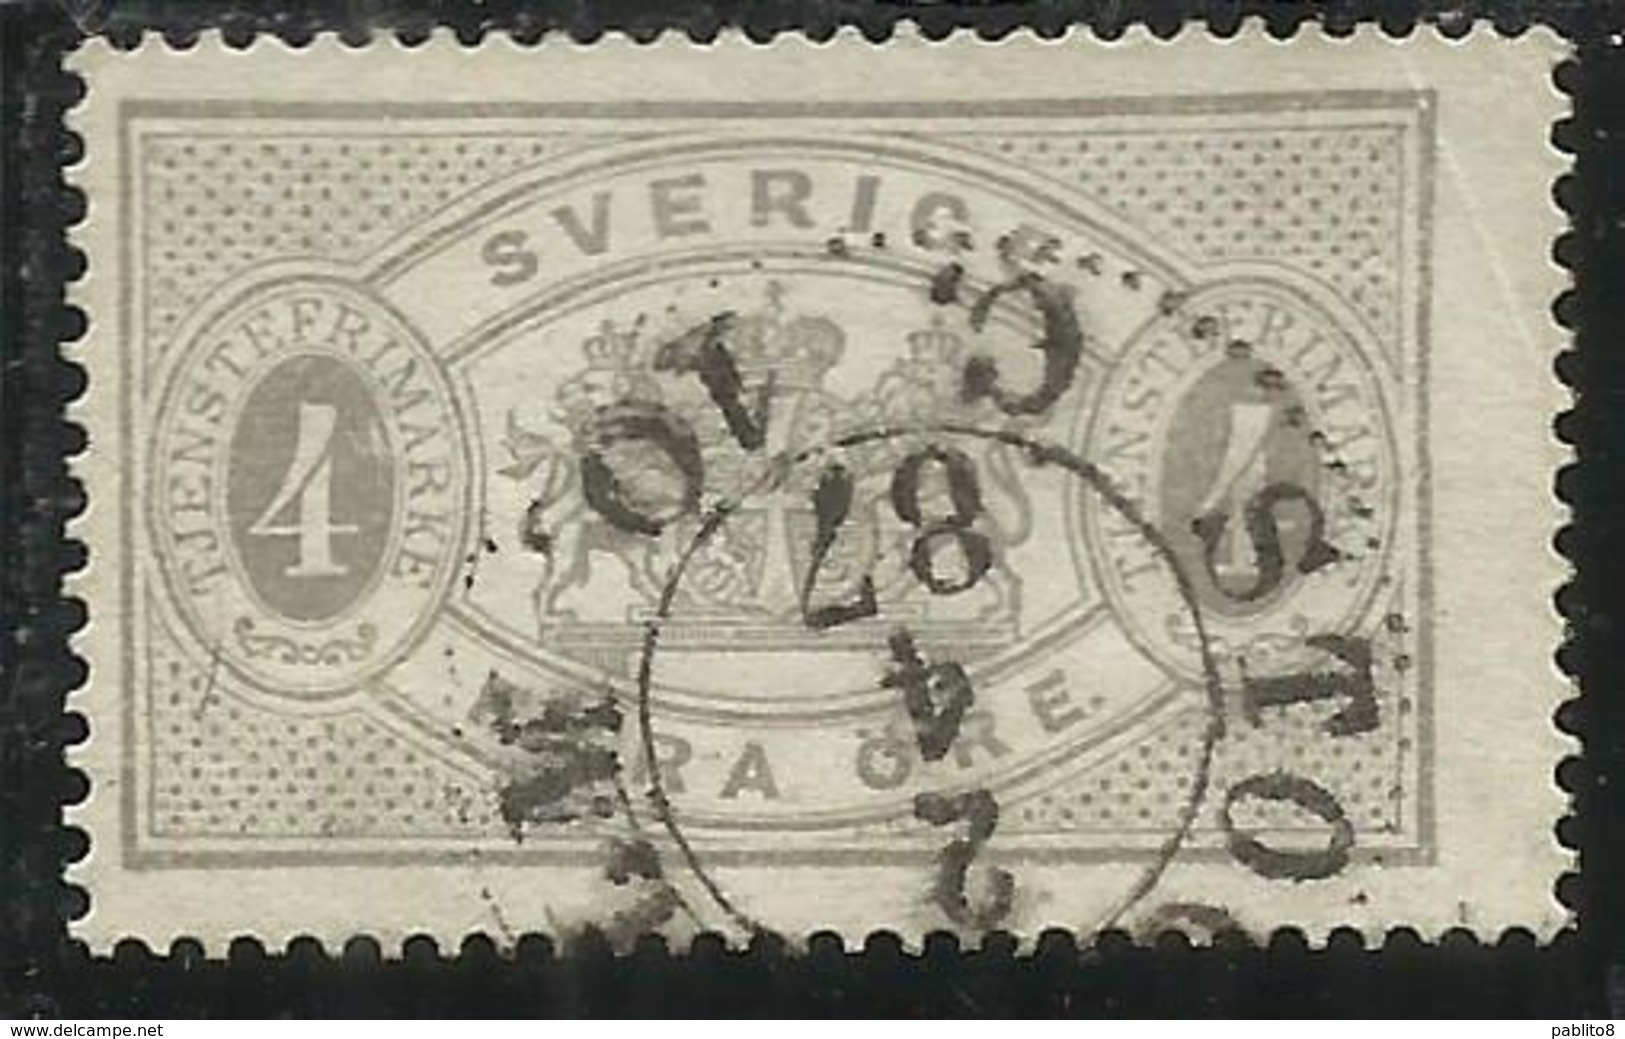 SWEDEN SVERIGE SVEZIA SUEDE 1874 1877 OFFICIAL STAMPS ORE 4o USATO USED OBLITERE' - Revenue Stamps